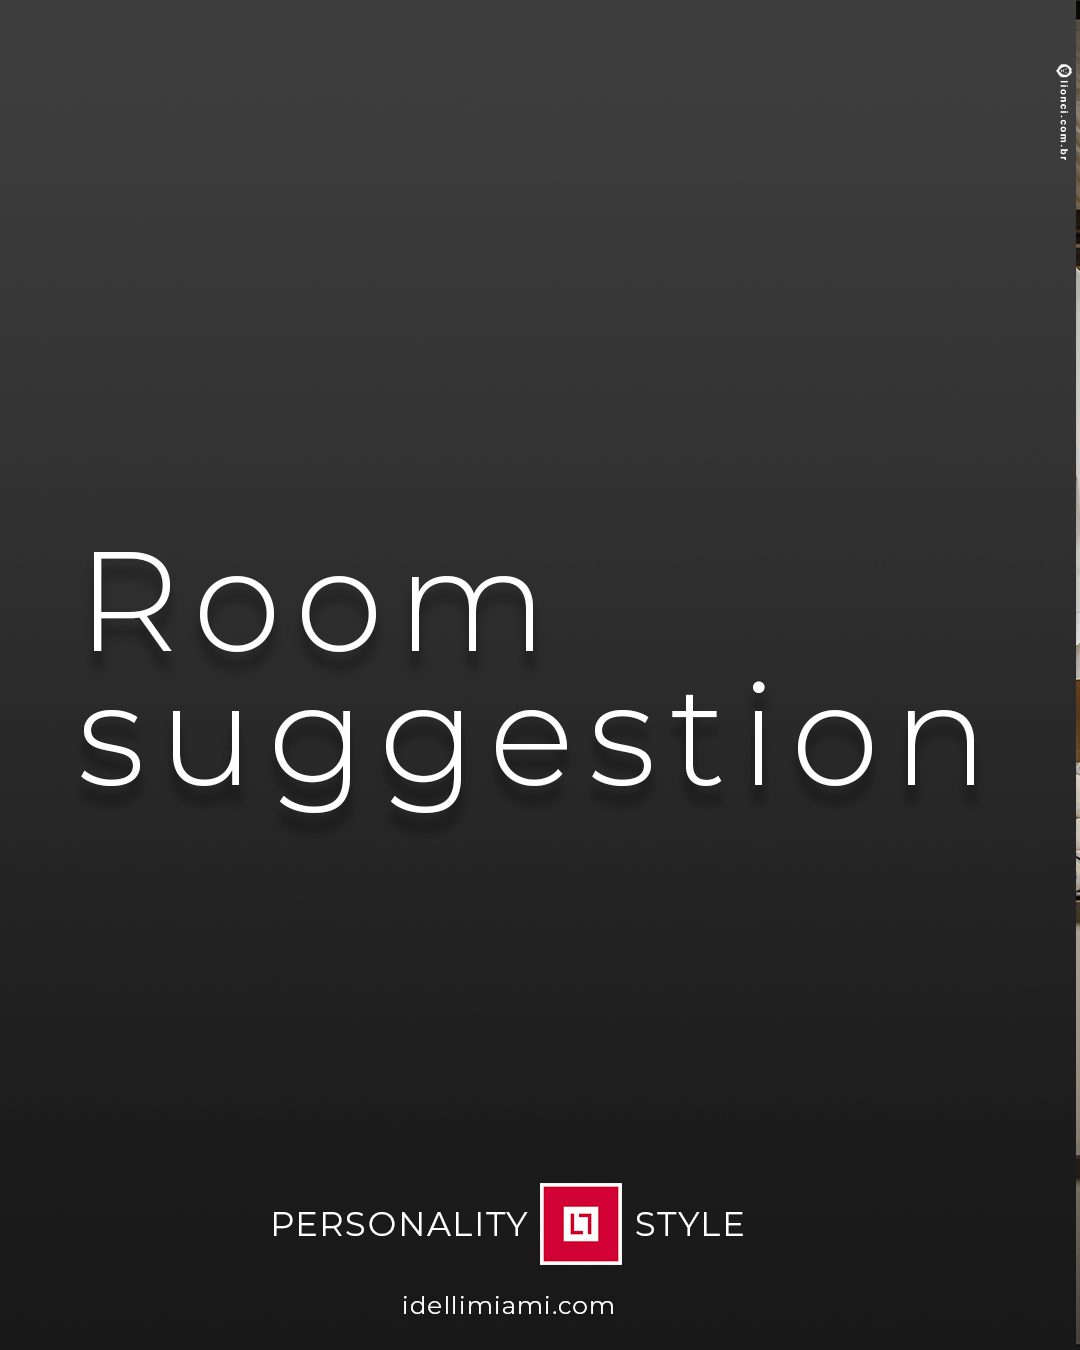 Room Suggestion